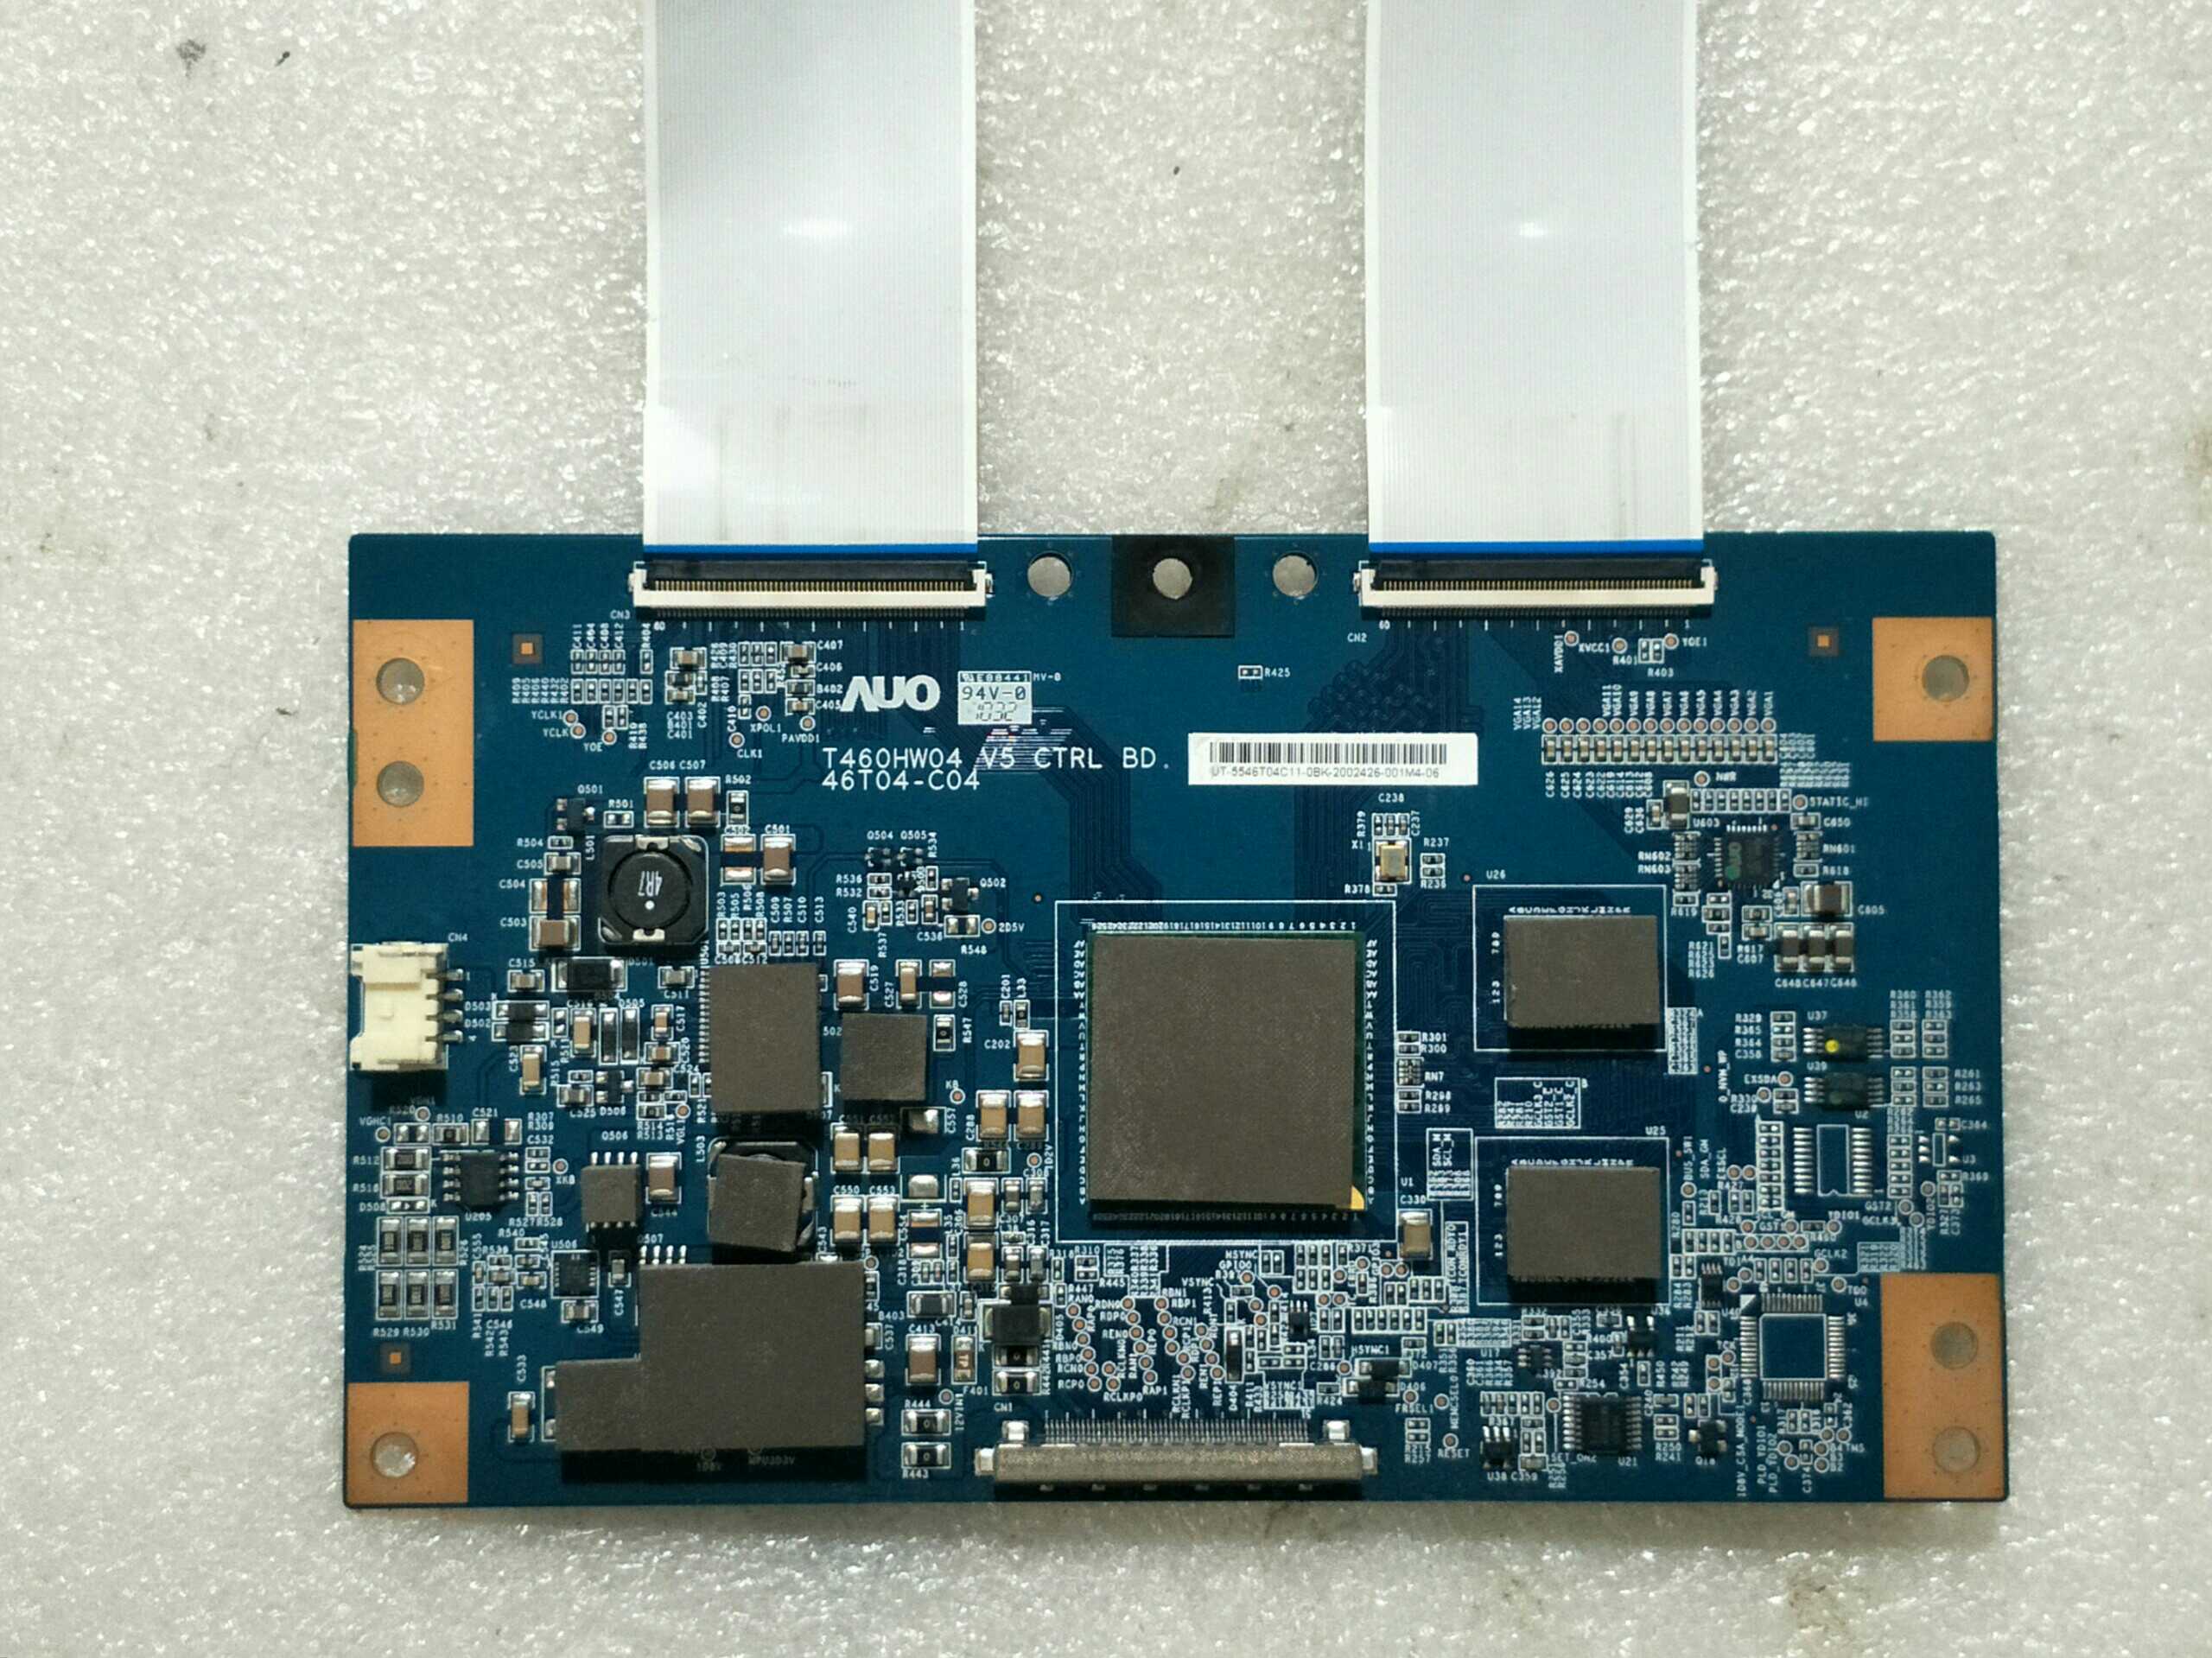 Sony KDL-46EX710 T-Con Board T460HW04 V5 CTRL BD 46T04-C04 Logic Board